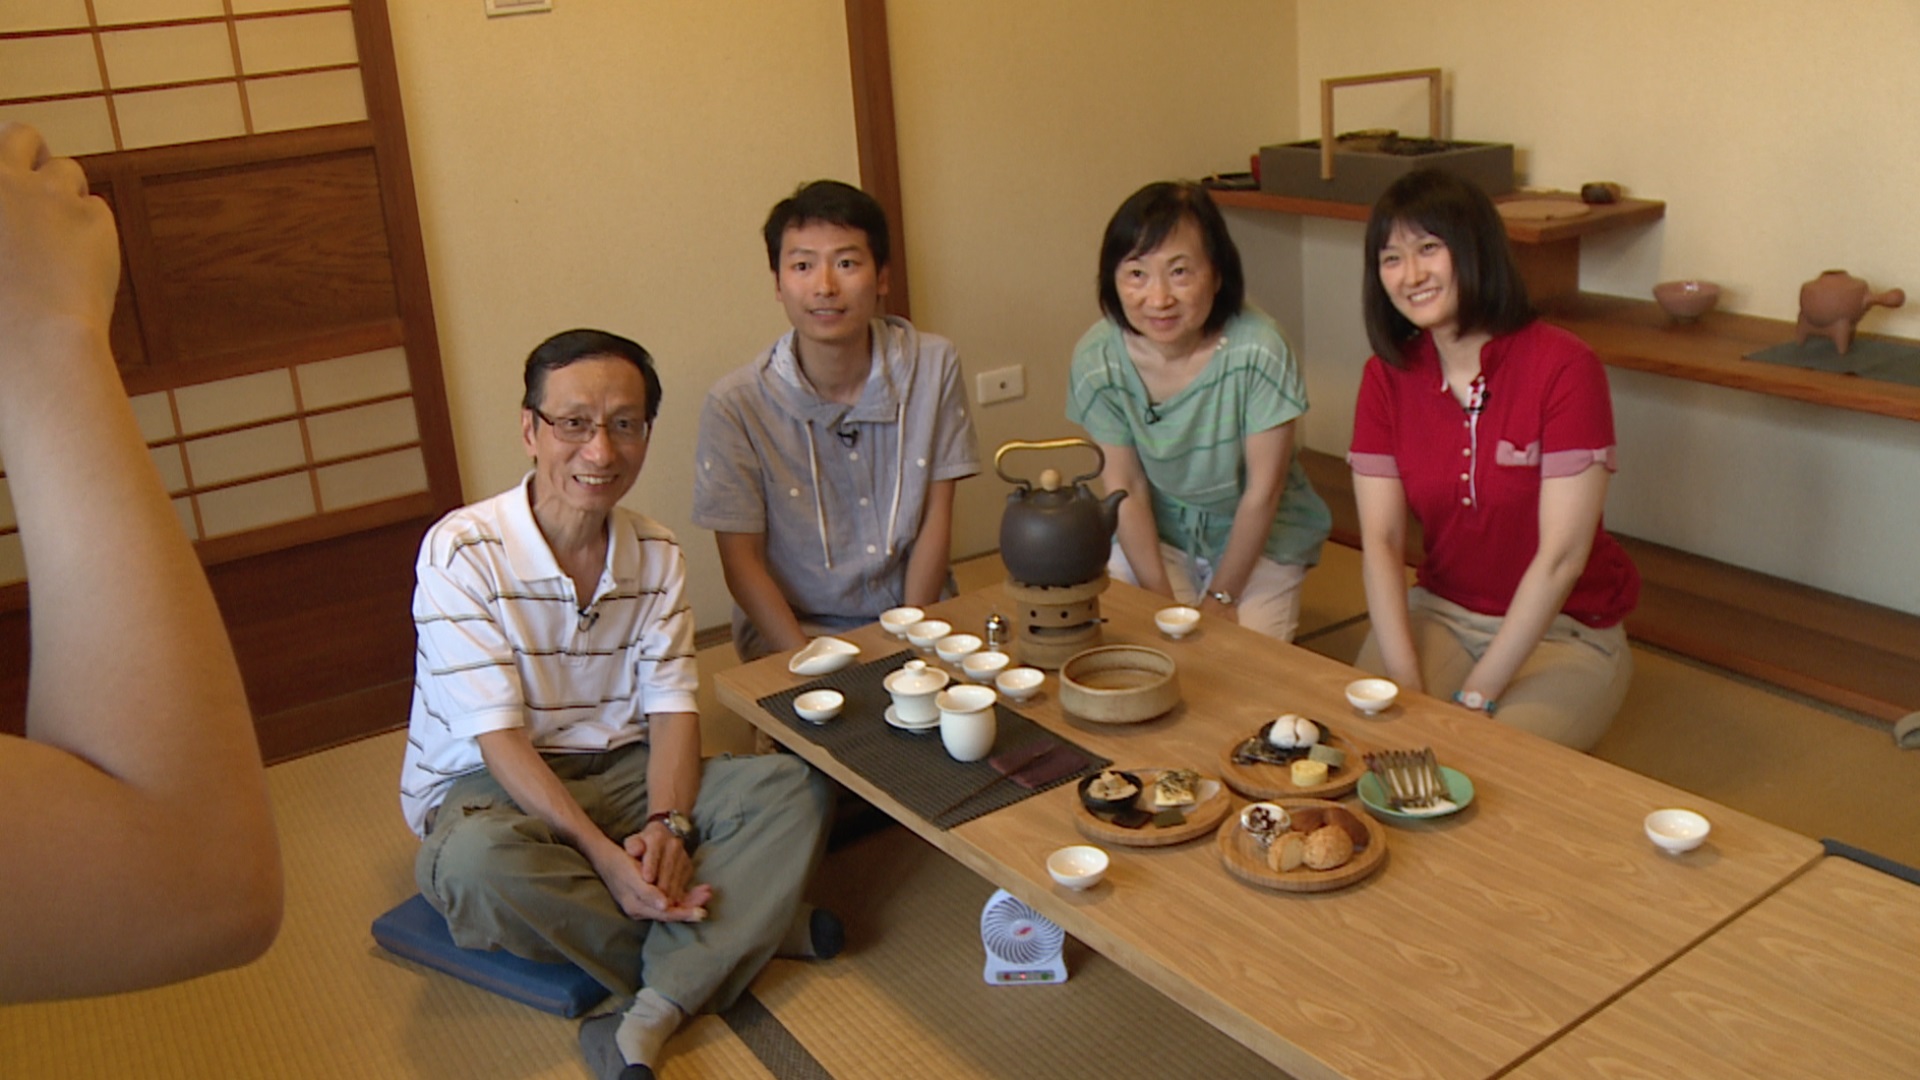 Alvin希望父母和他的日本女友Misaki能互相了解，他們在一間位於日式舊建築物內的茶屋品茗，以日本文化展開這趟旅程。